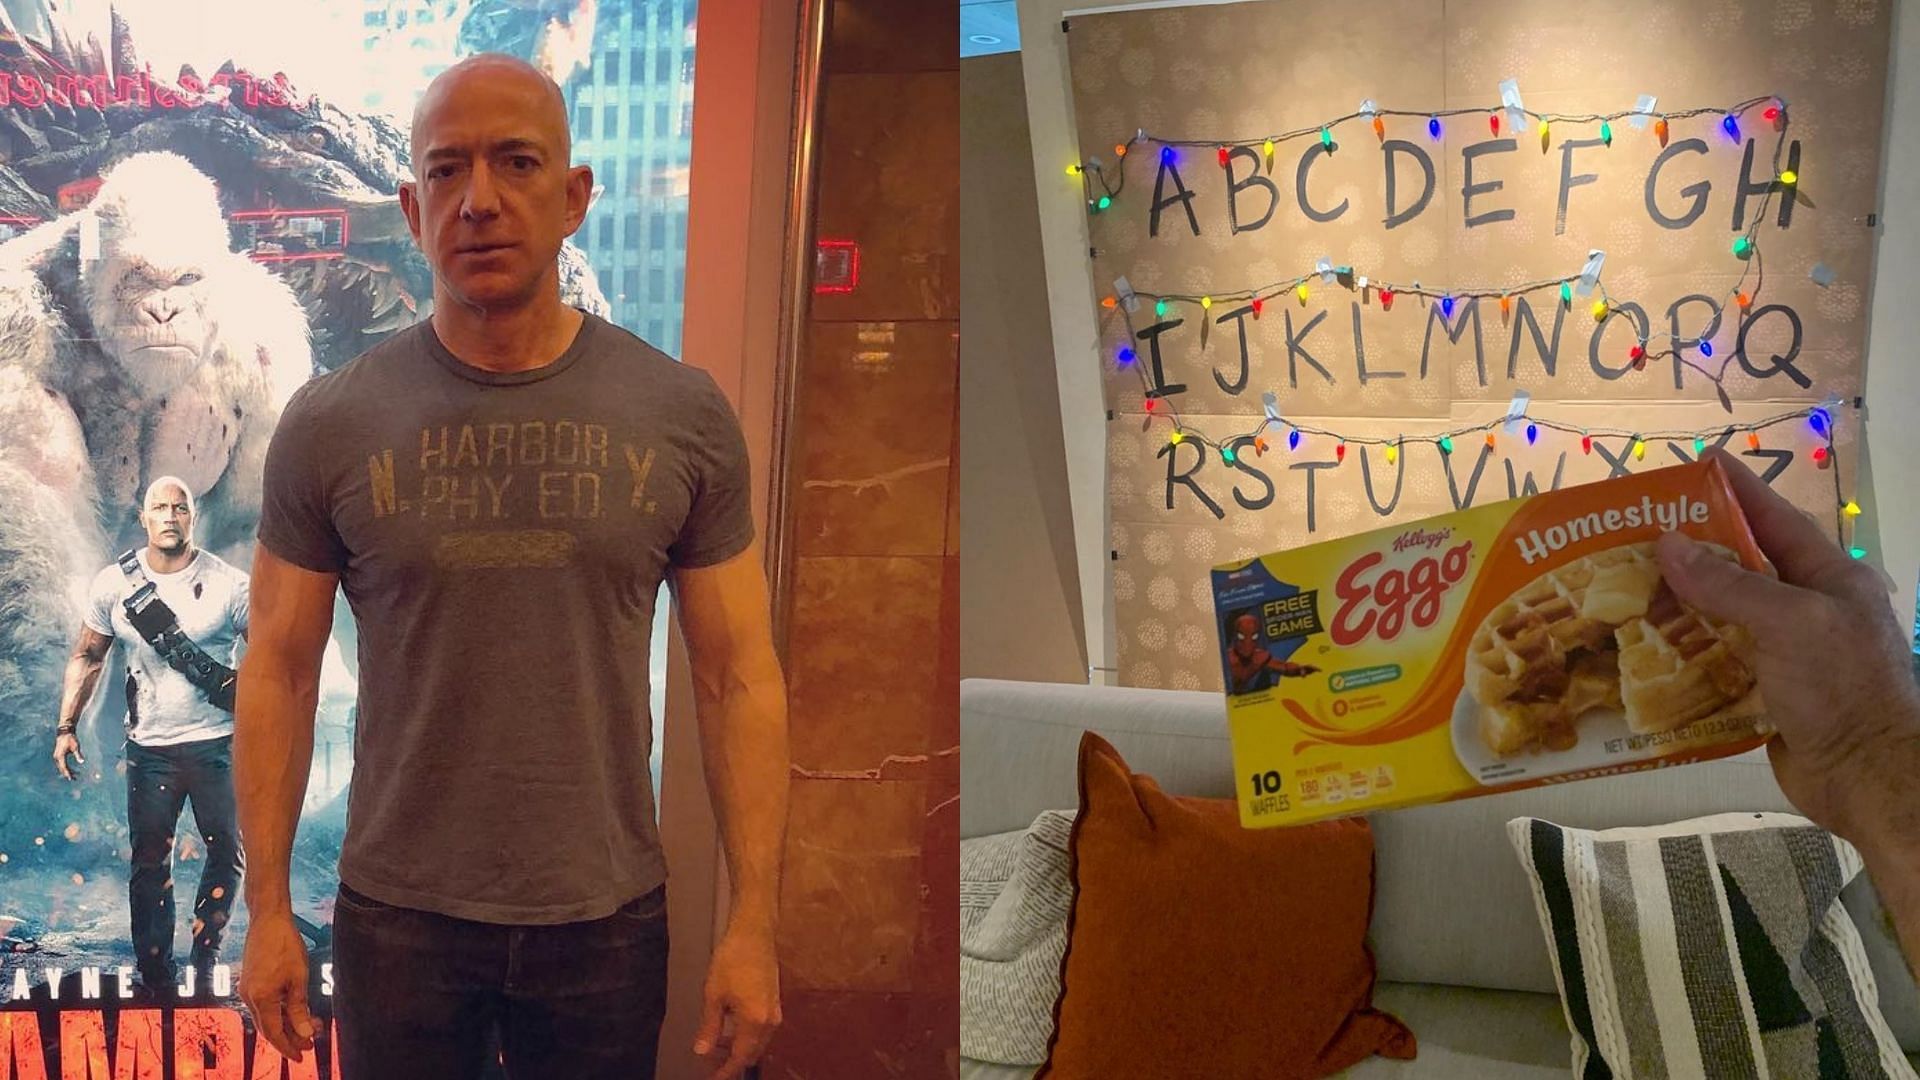 Netflix’s Stranger Things 3: Jeff Bezos binge-watched <i>Stranger Things</i> with his kids.